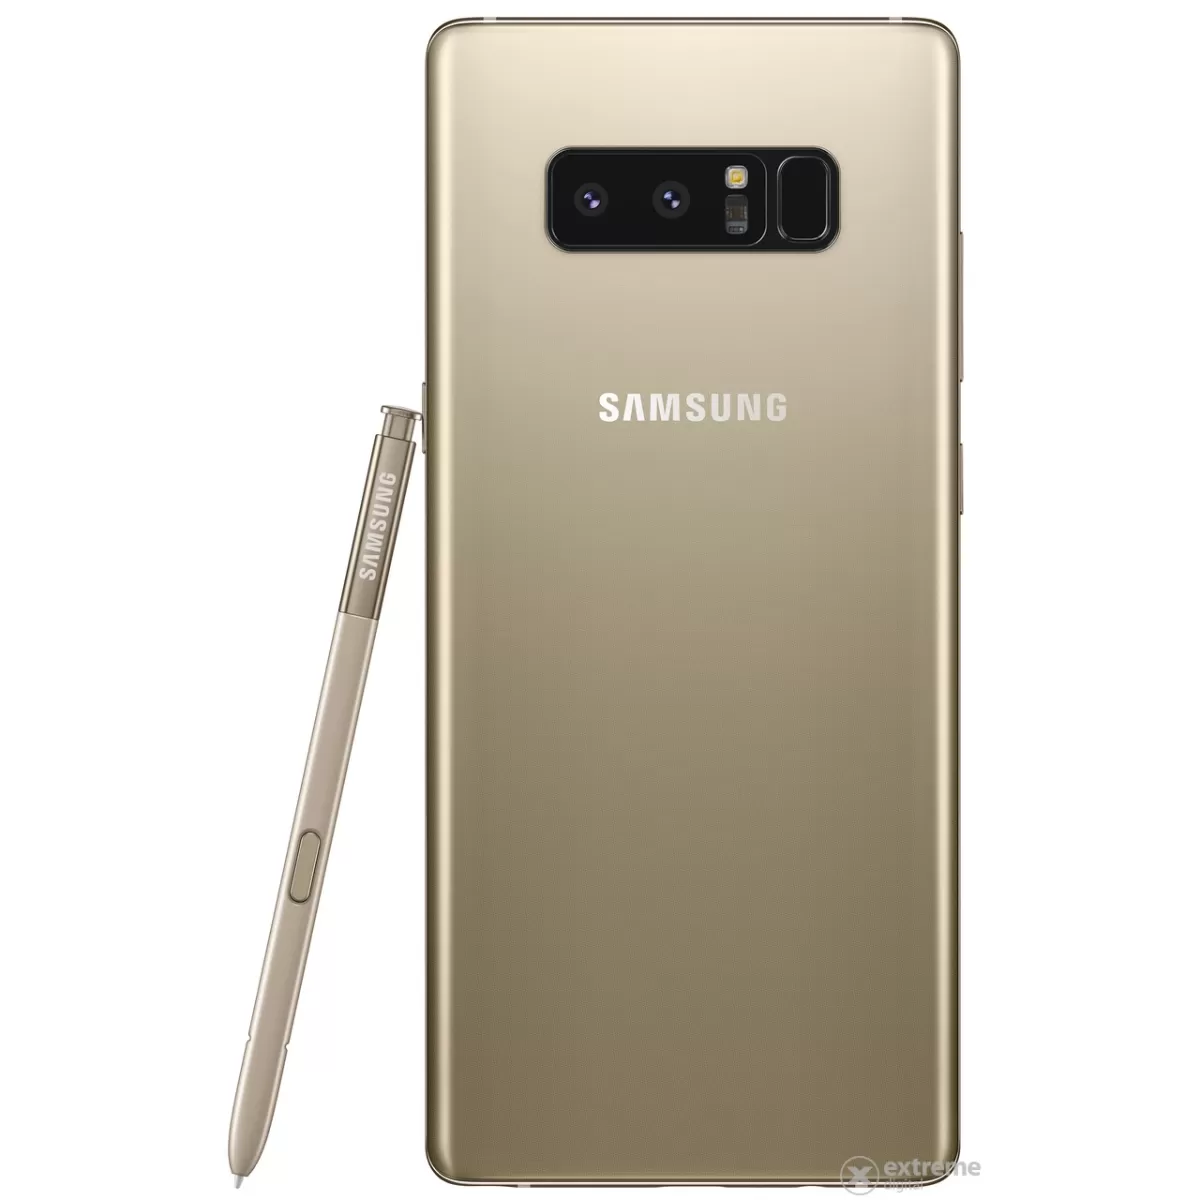 Смартфон Smartphone Samsung SMN950F GALAXY Note 8, 64 GB, Gold